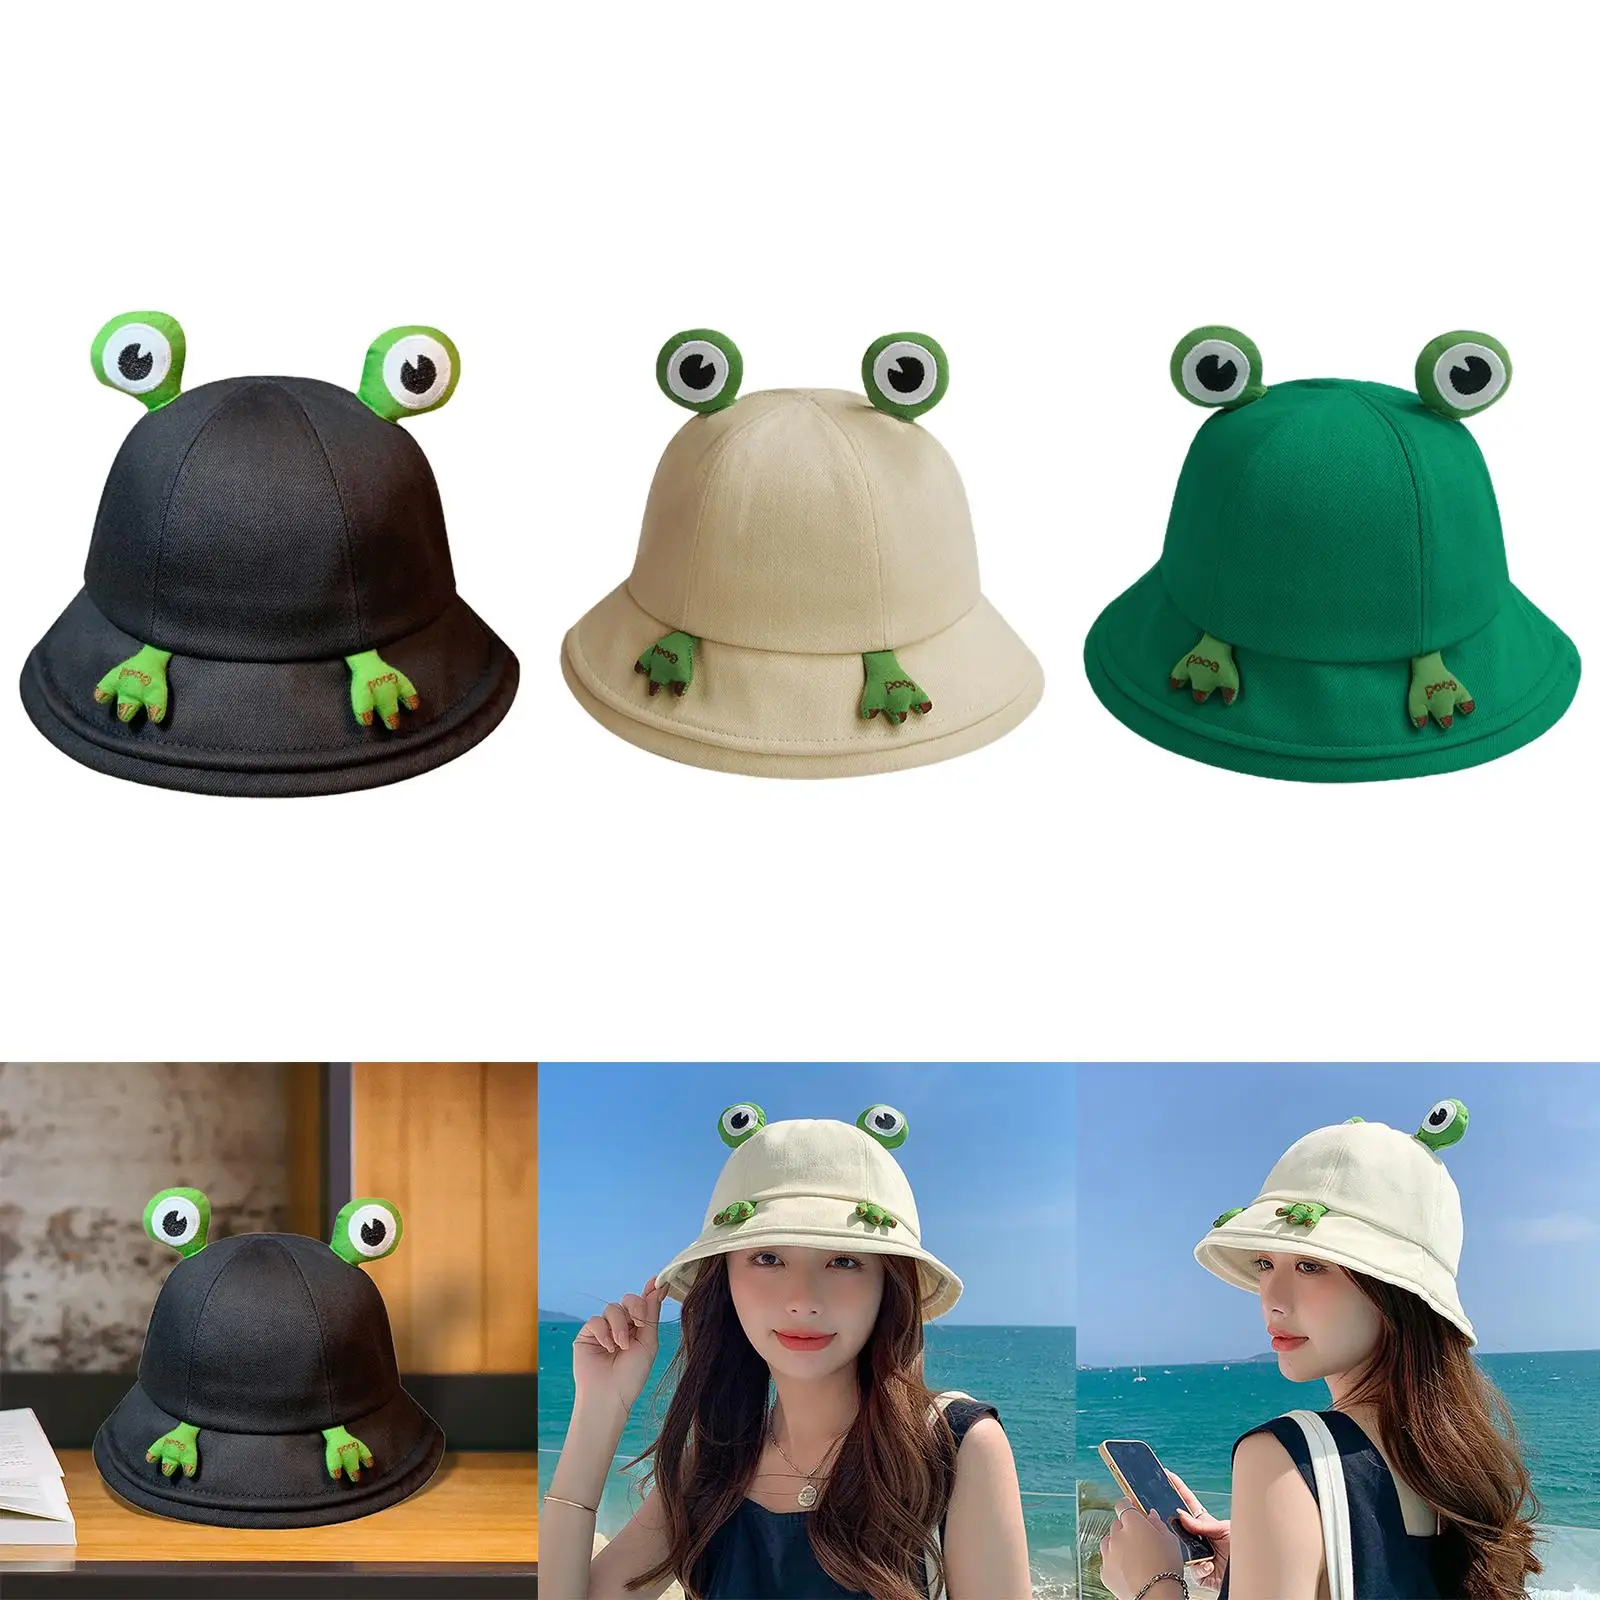 Frog Bucket Hat, Party hat Protection Cotton Wide Brim Adjustable Cute Fisherman Caps for Fancy Dress Outdoor women Teens